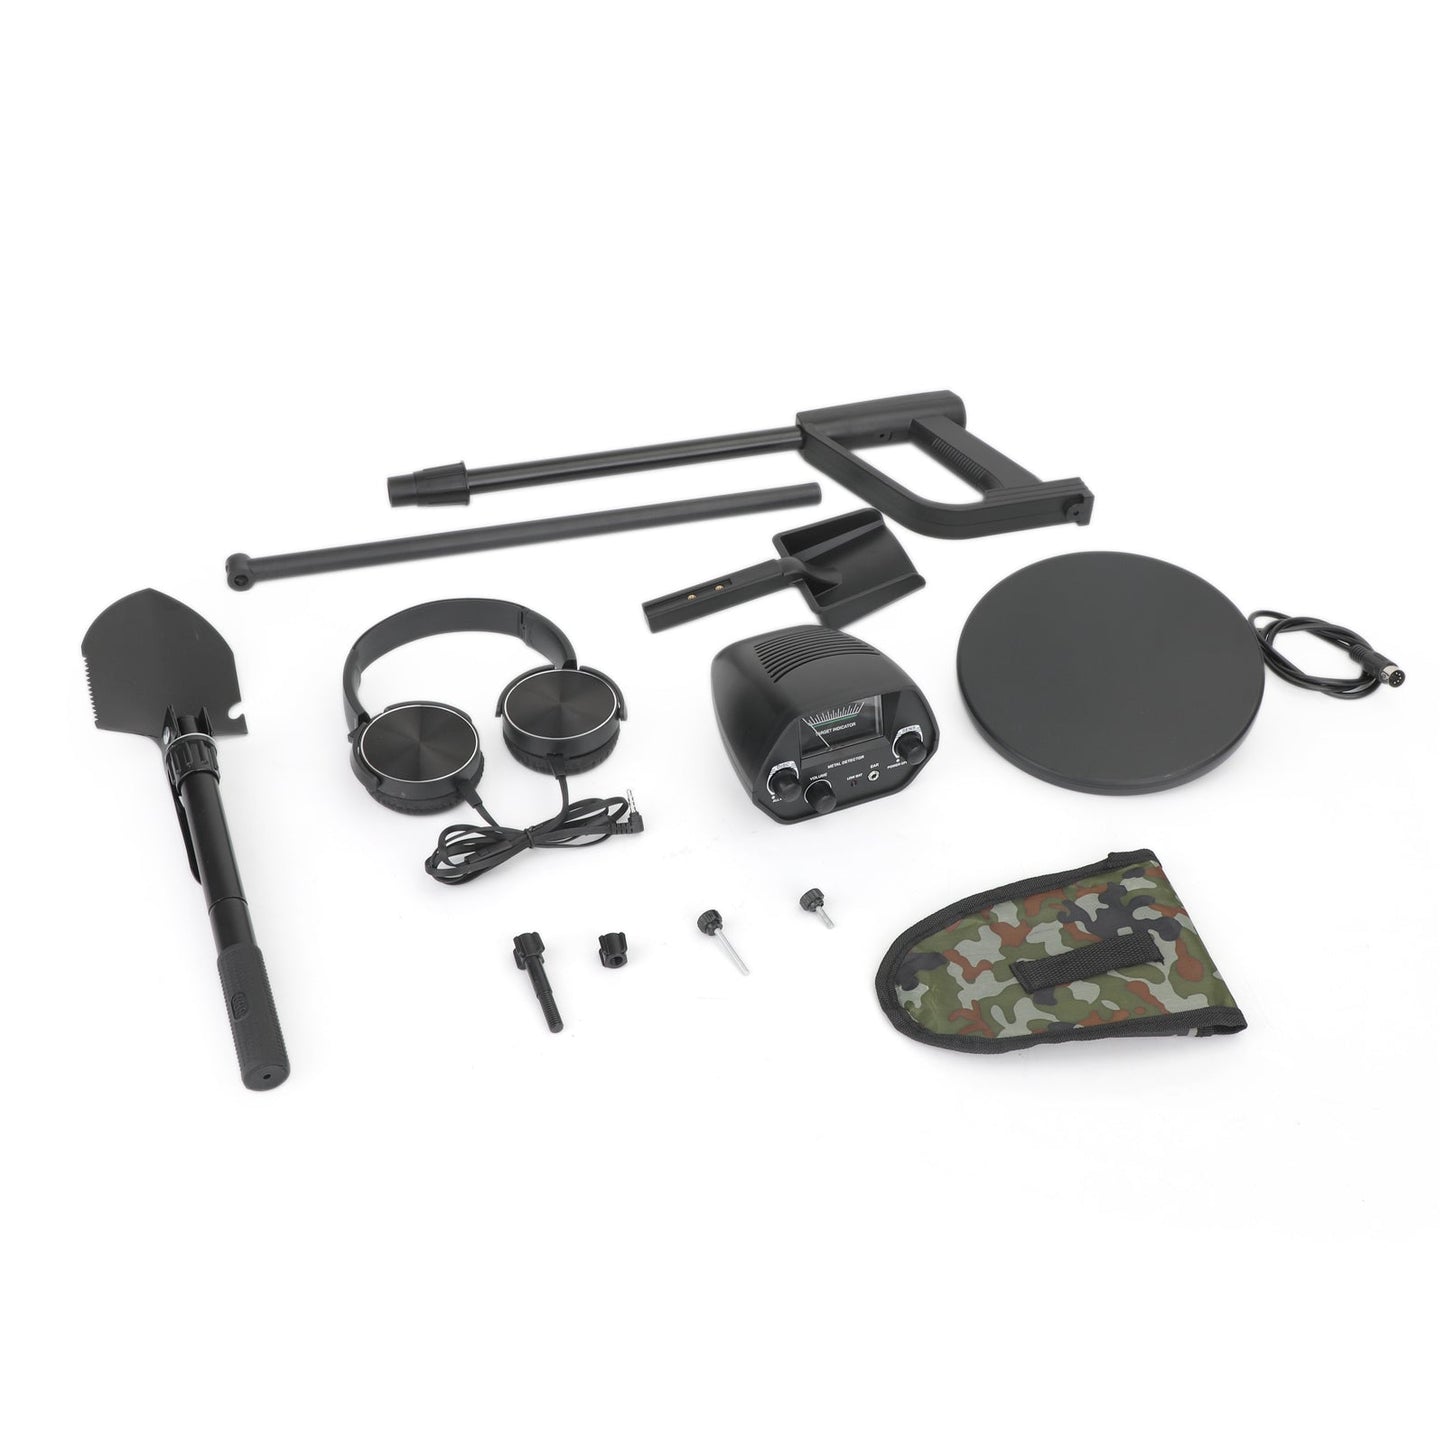 7.8" Hunter Deep Sensitive Metal Detector + Shovel + Earphone Waterproof